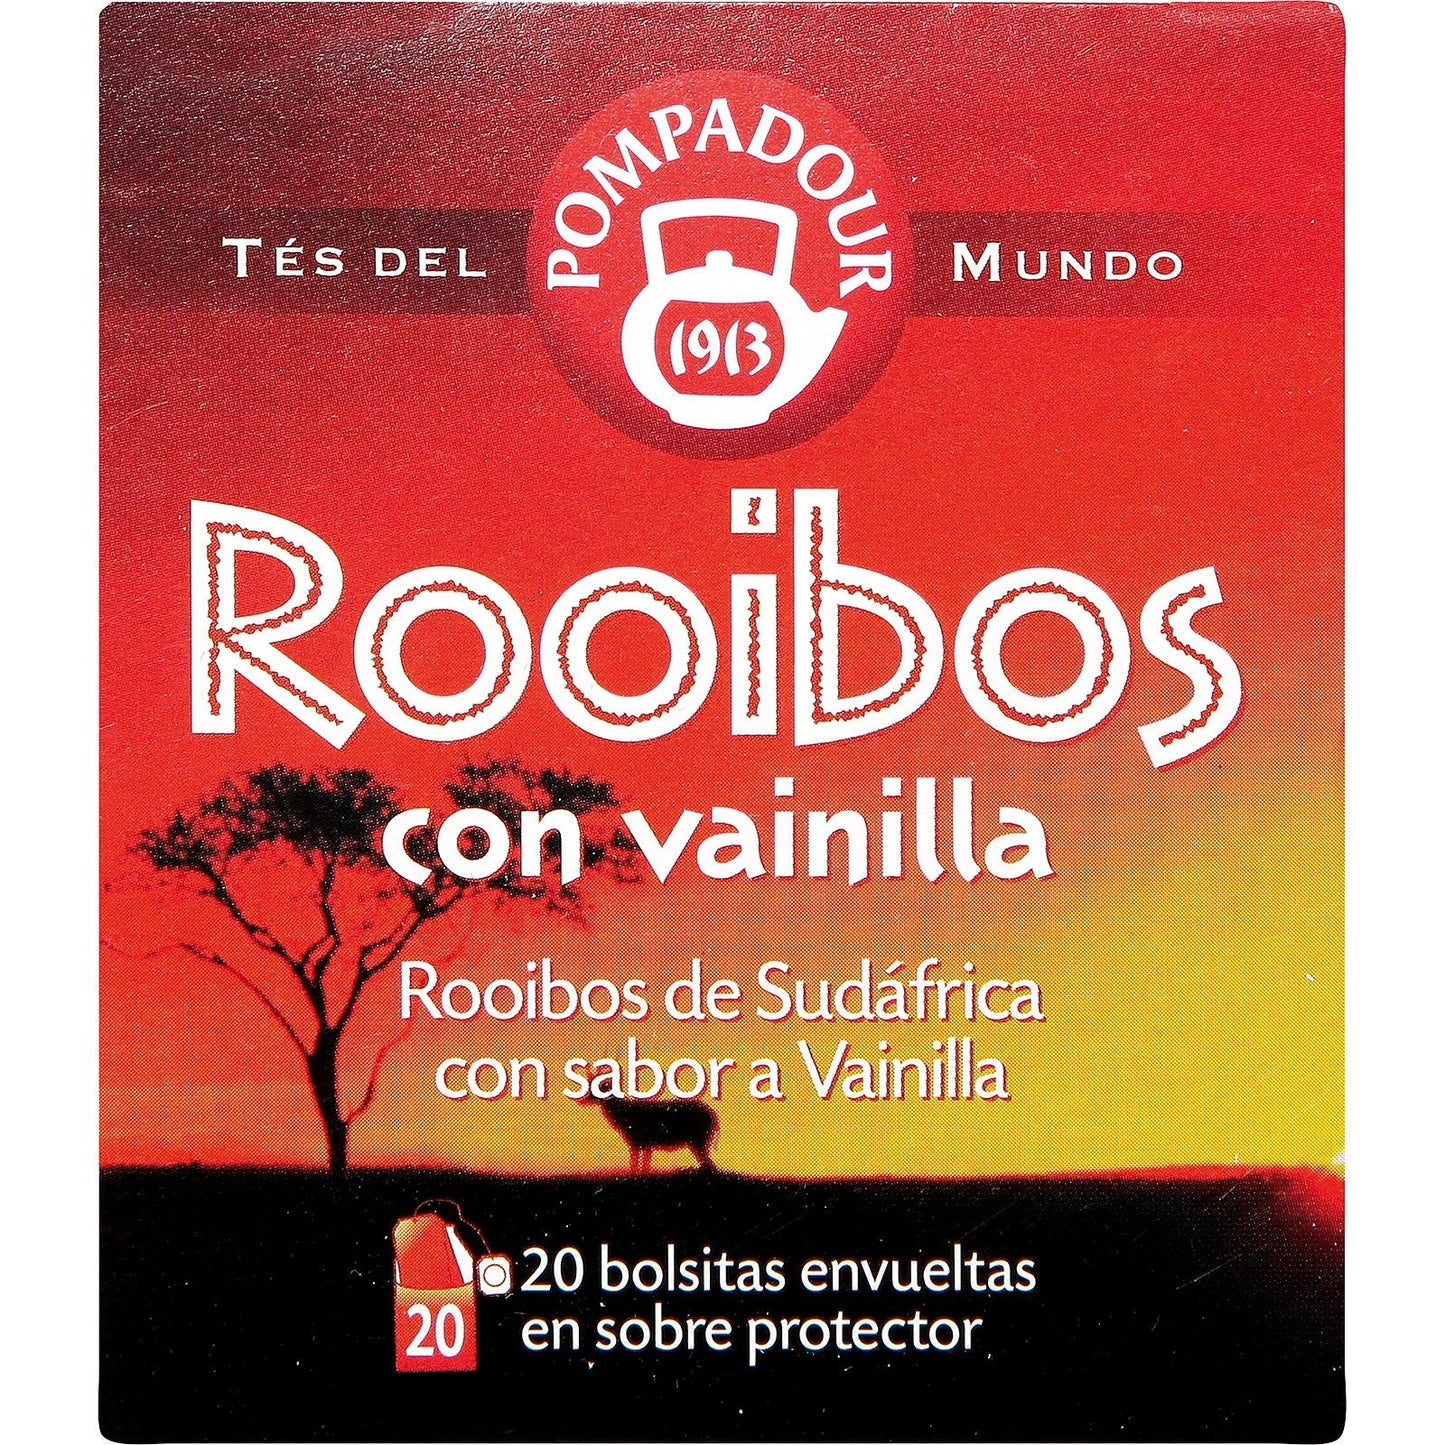 Rooibos & Vanilla 20 Tea Bags